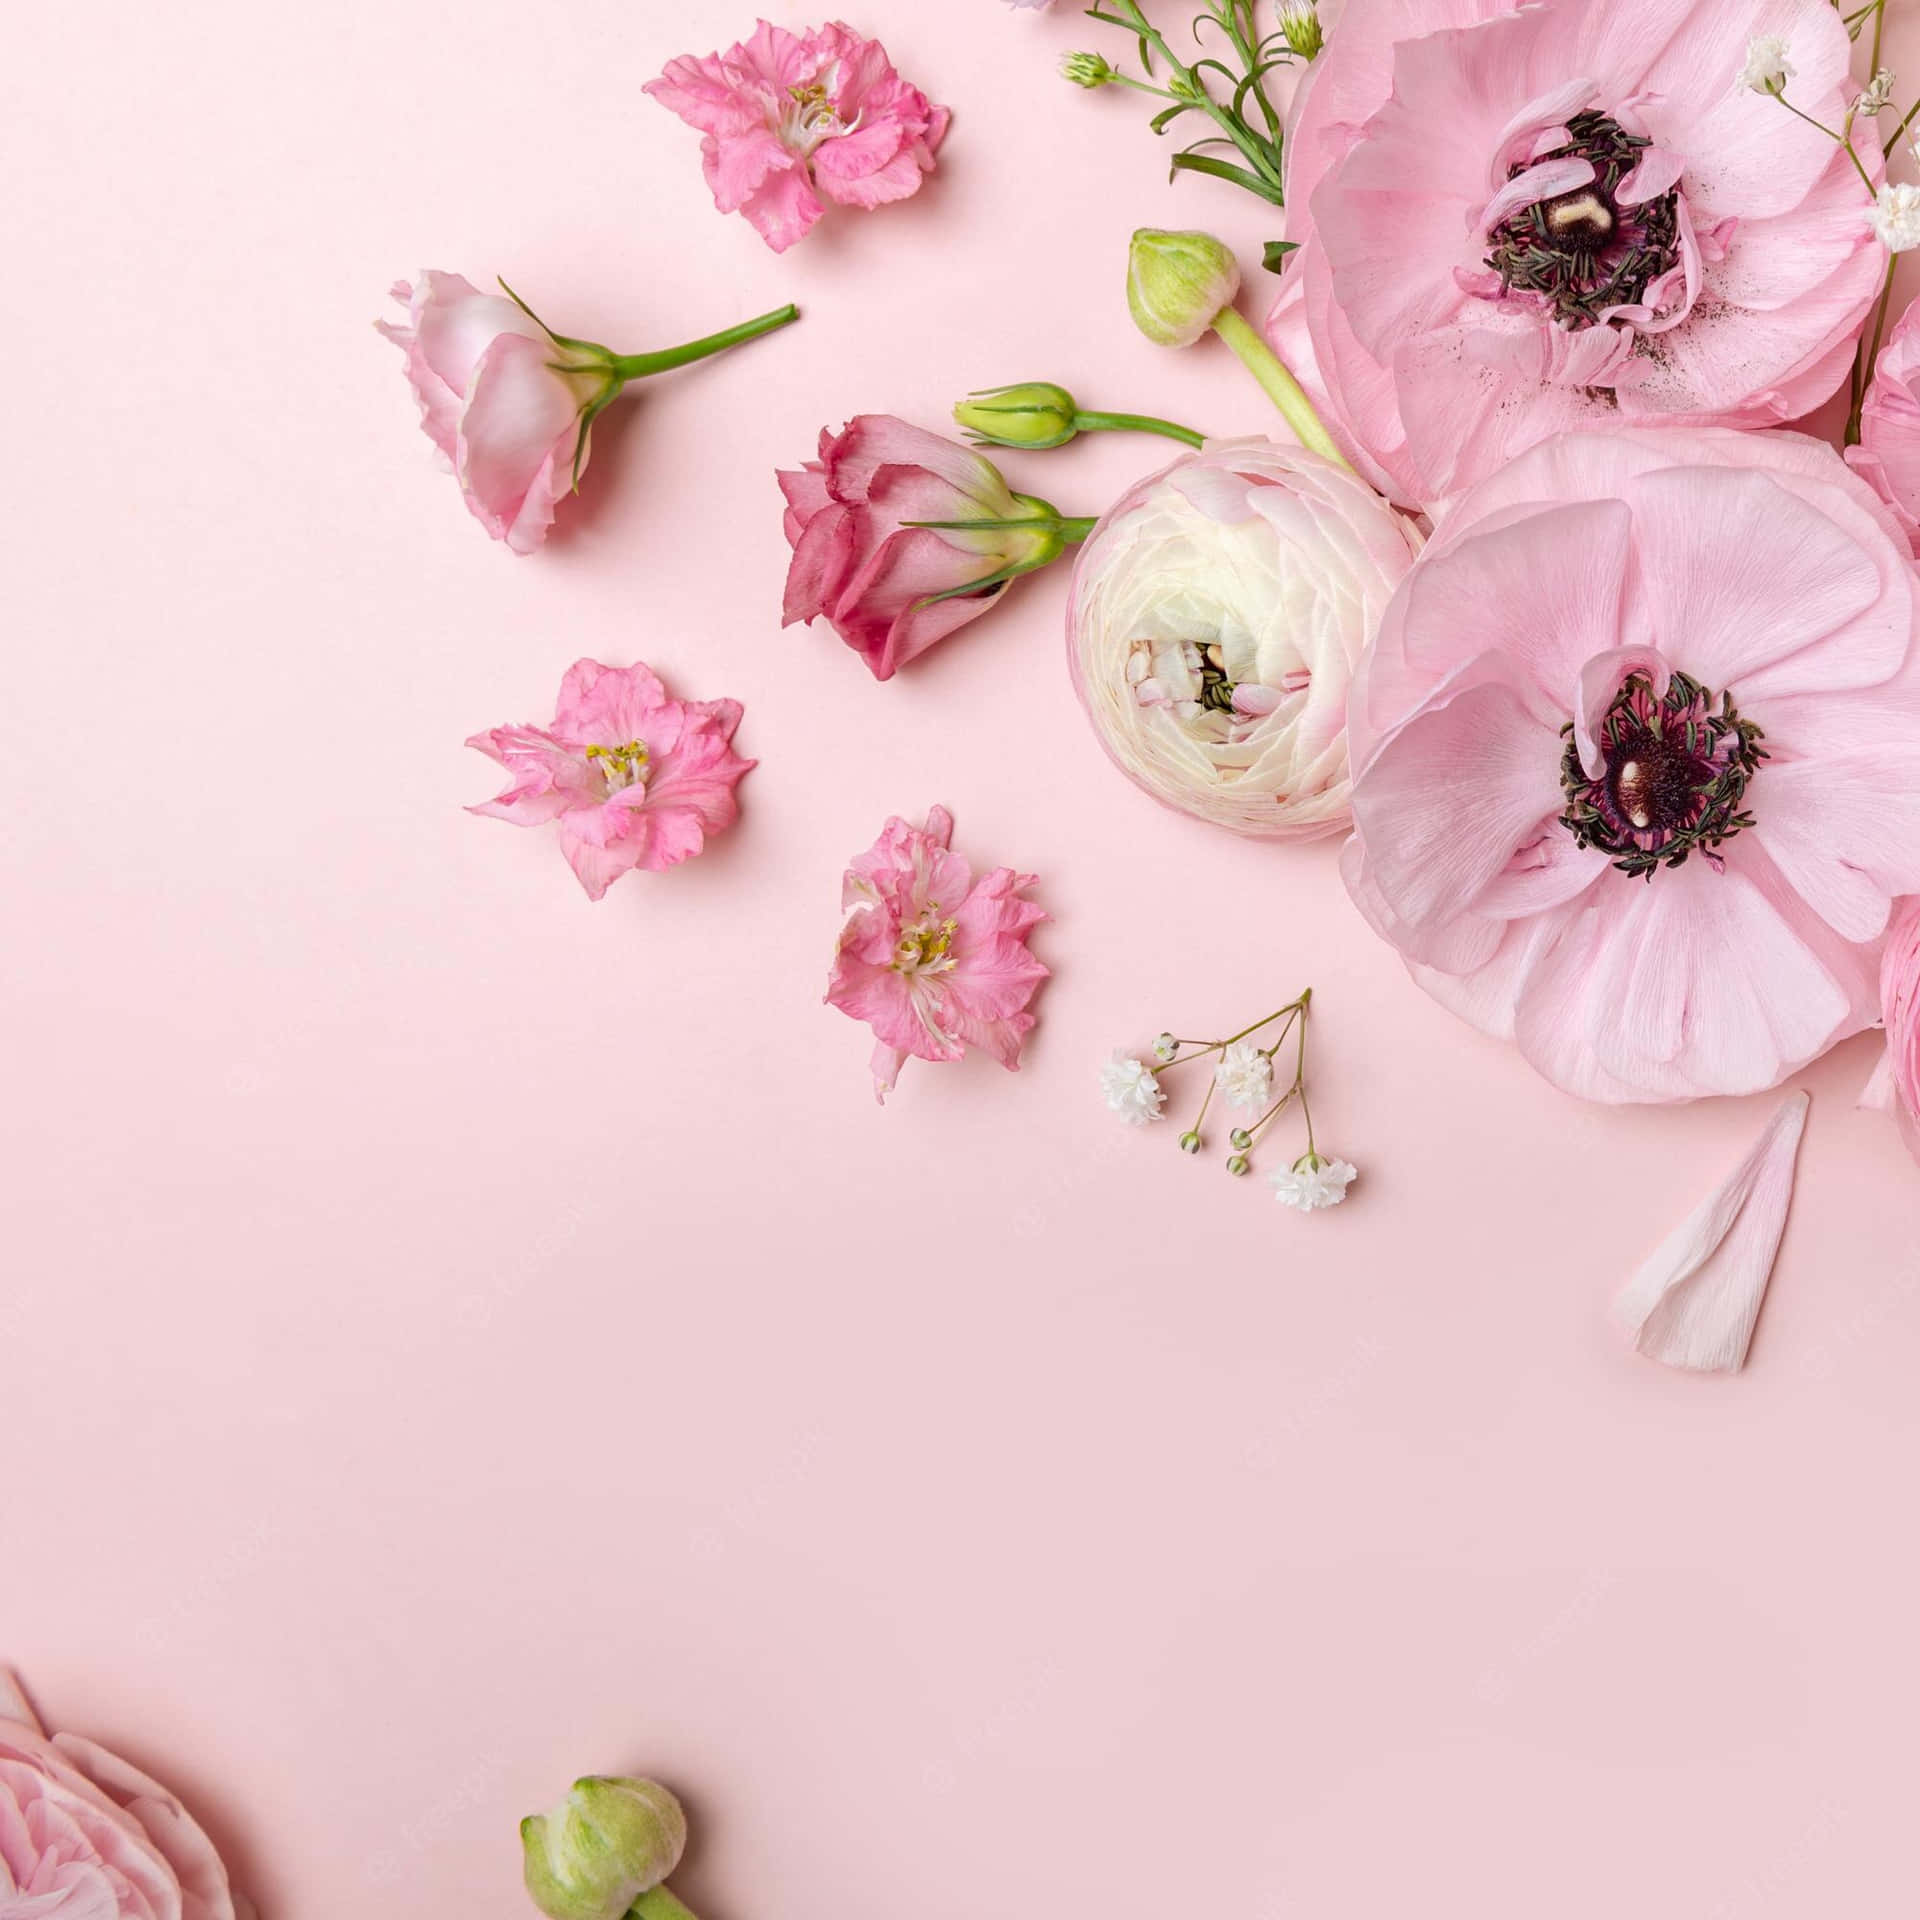 Tender Pink Floral Arrangement Wallpaper